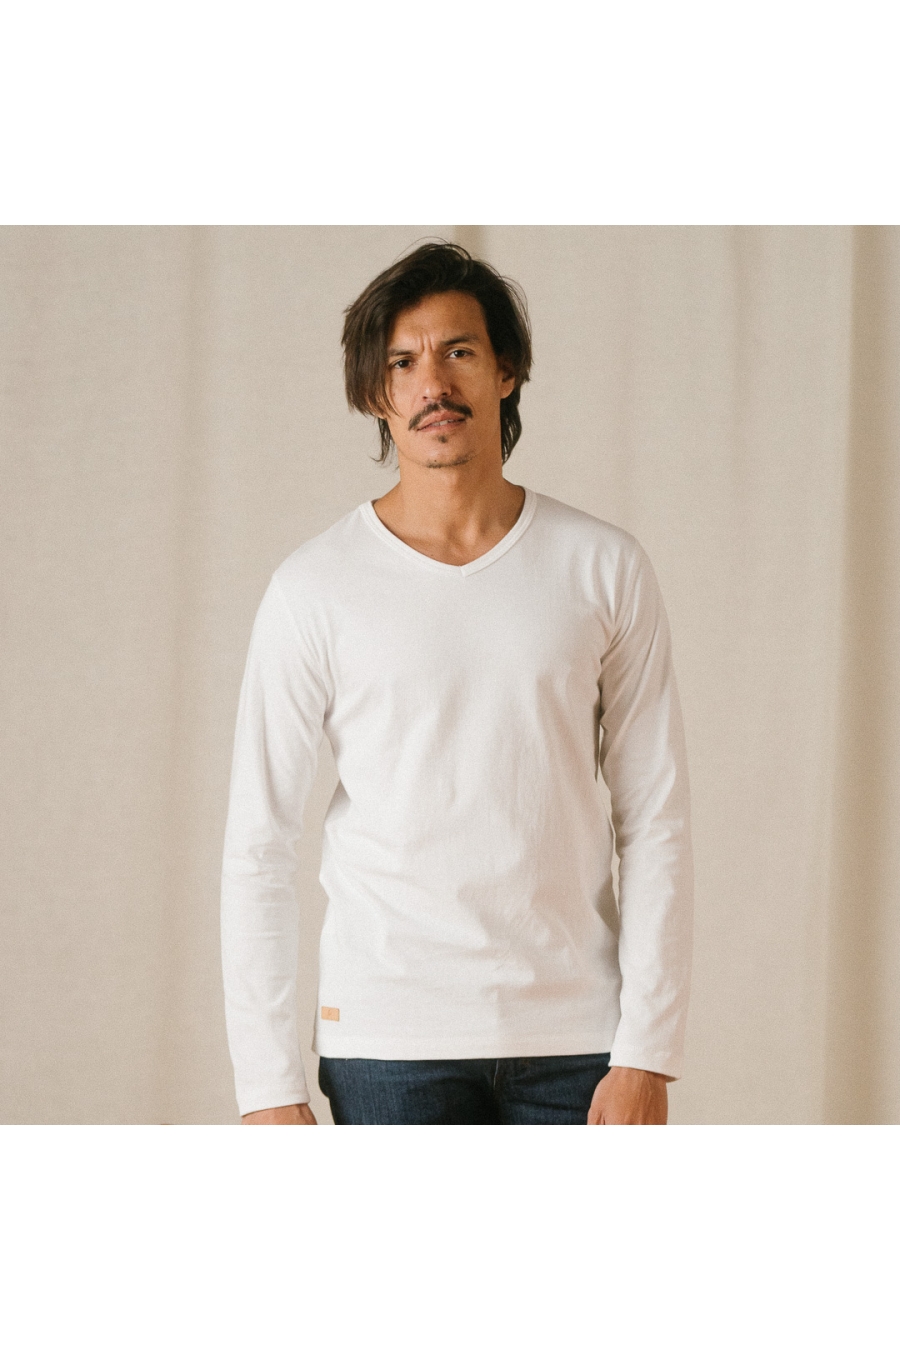 Tee-shirt Blanc Col V Coton Bio personnalisé – POP ART DESIGN